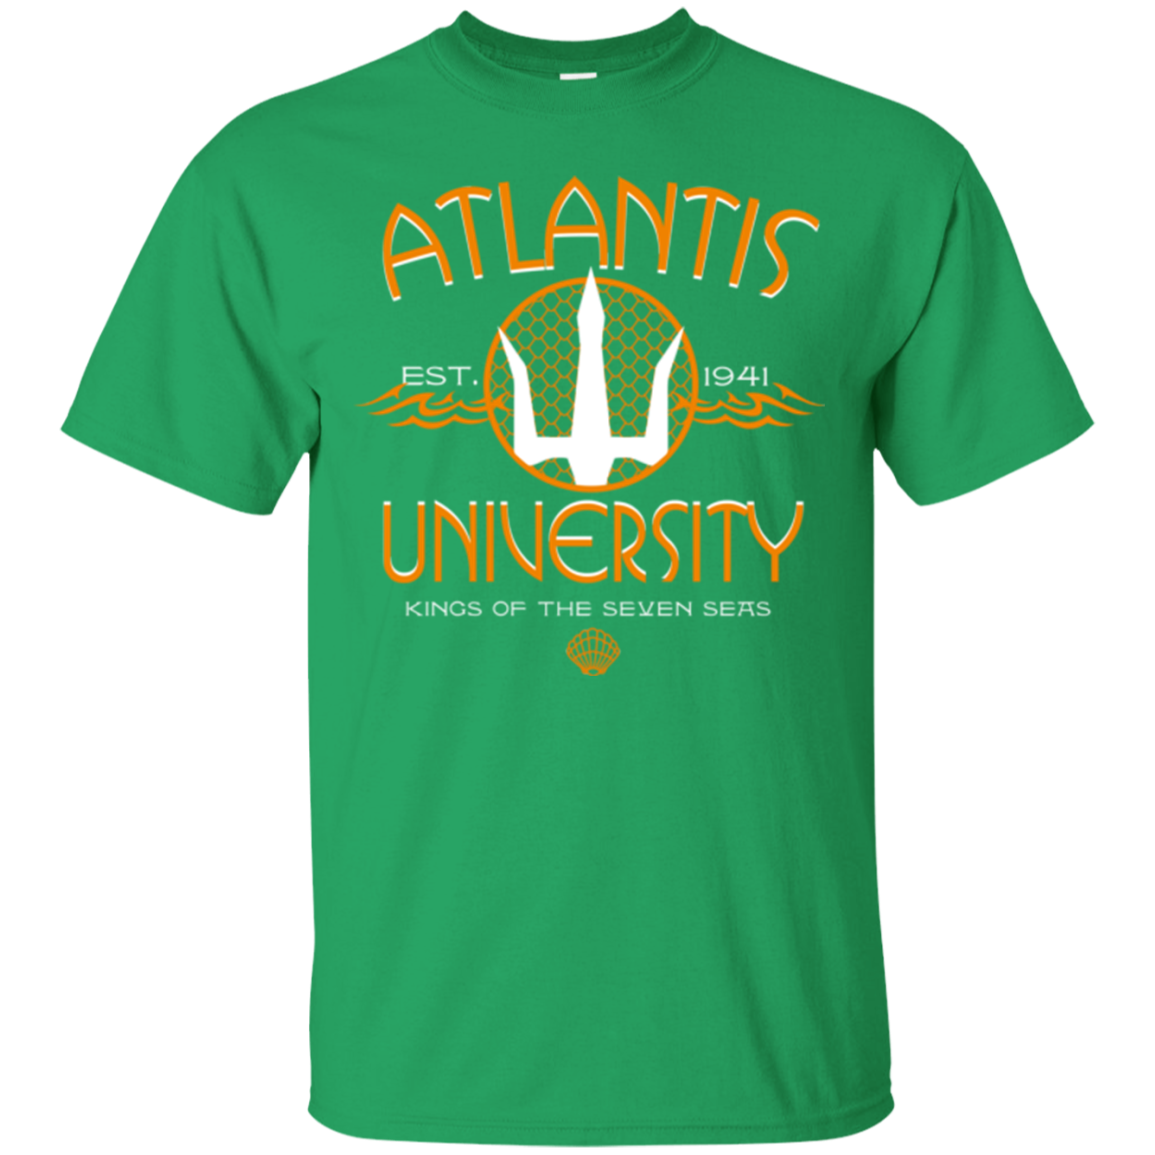 Atlantis University T-Shirt